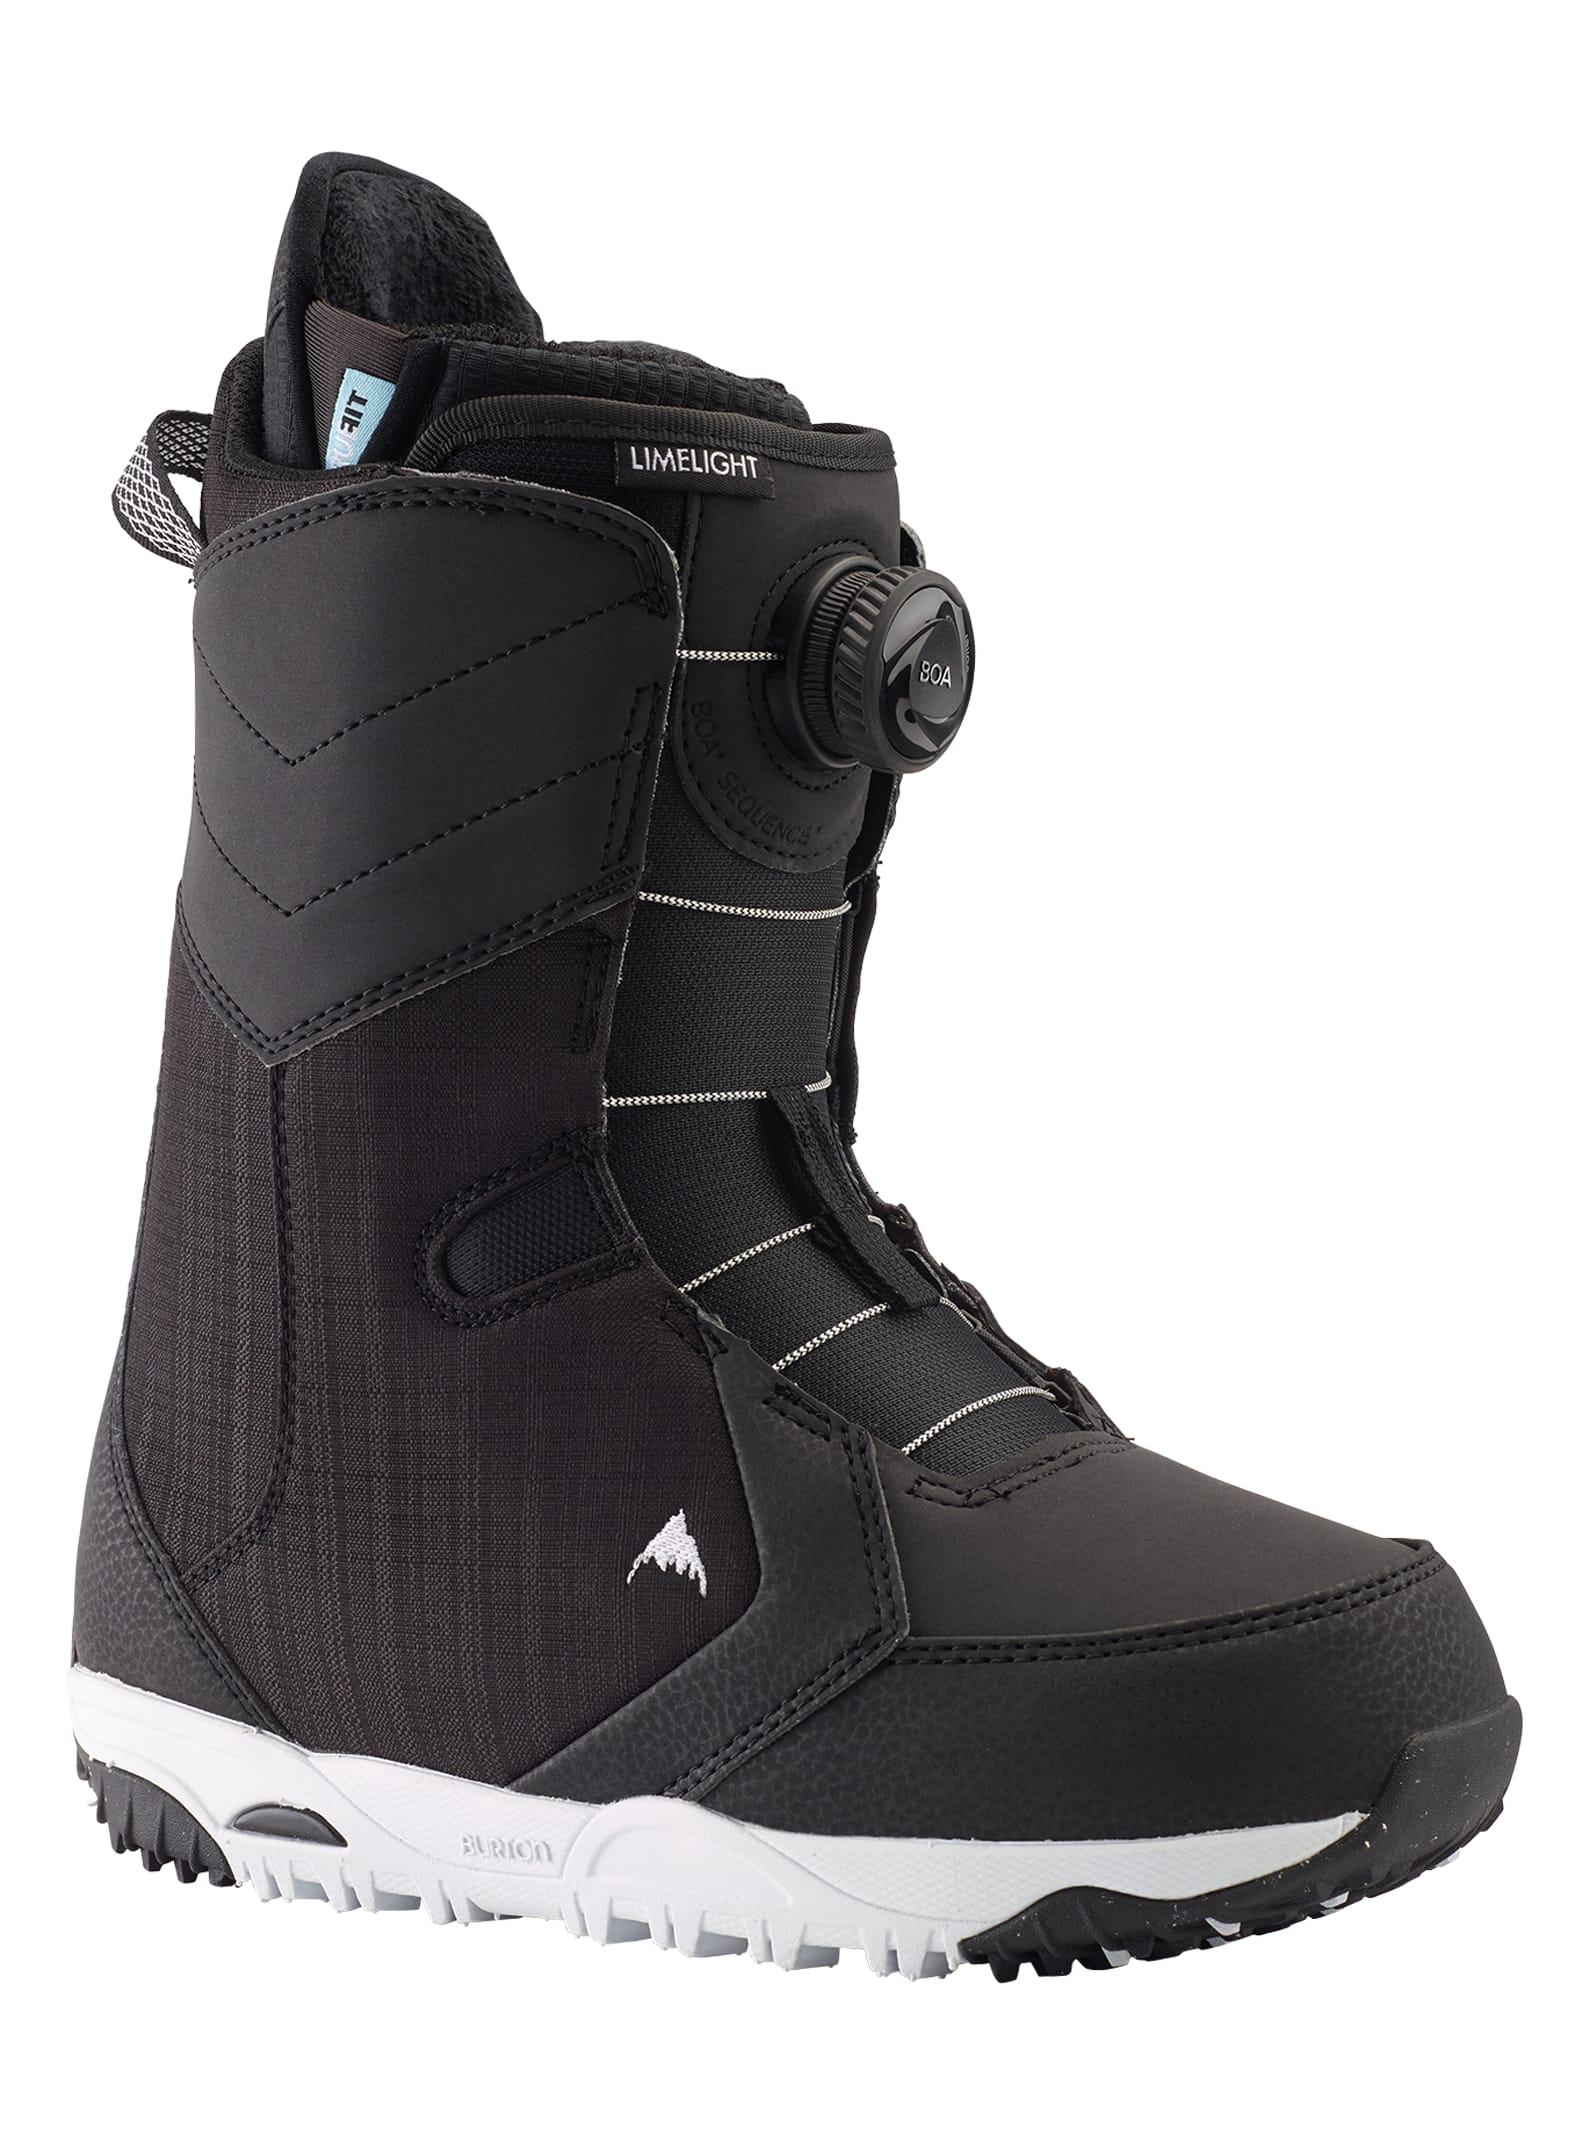 Burton - Boots de snowboard Limelight Boa® femme, Black, 10